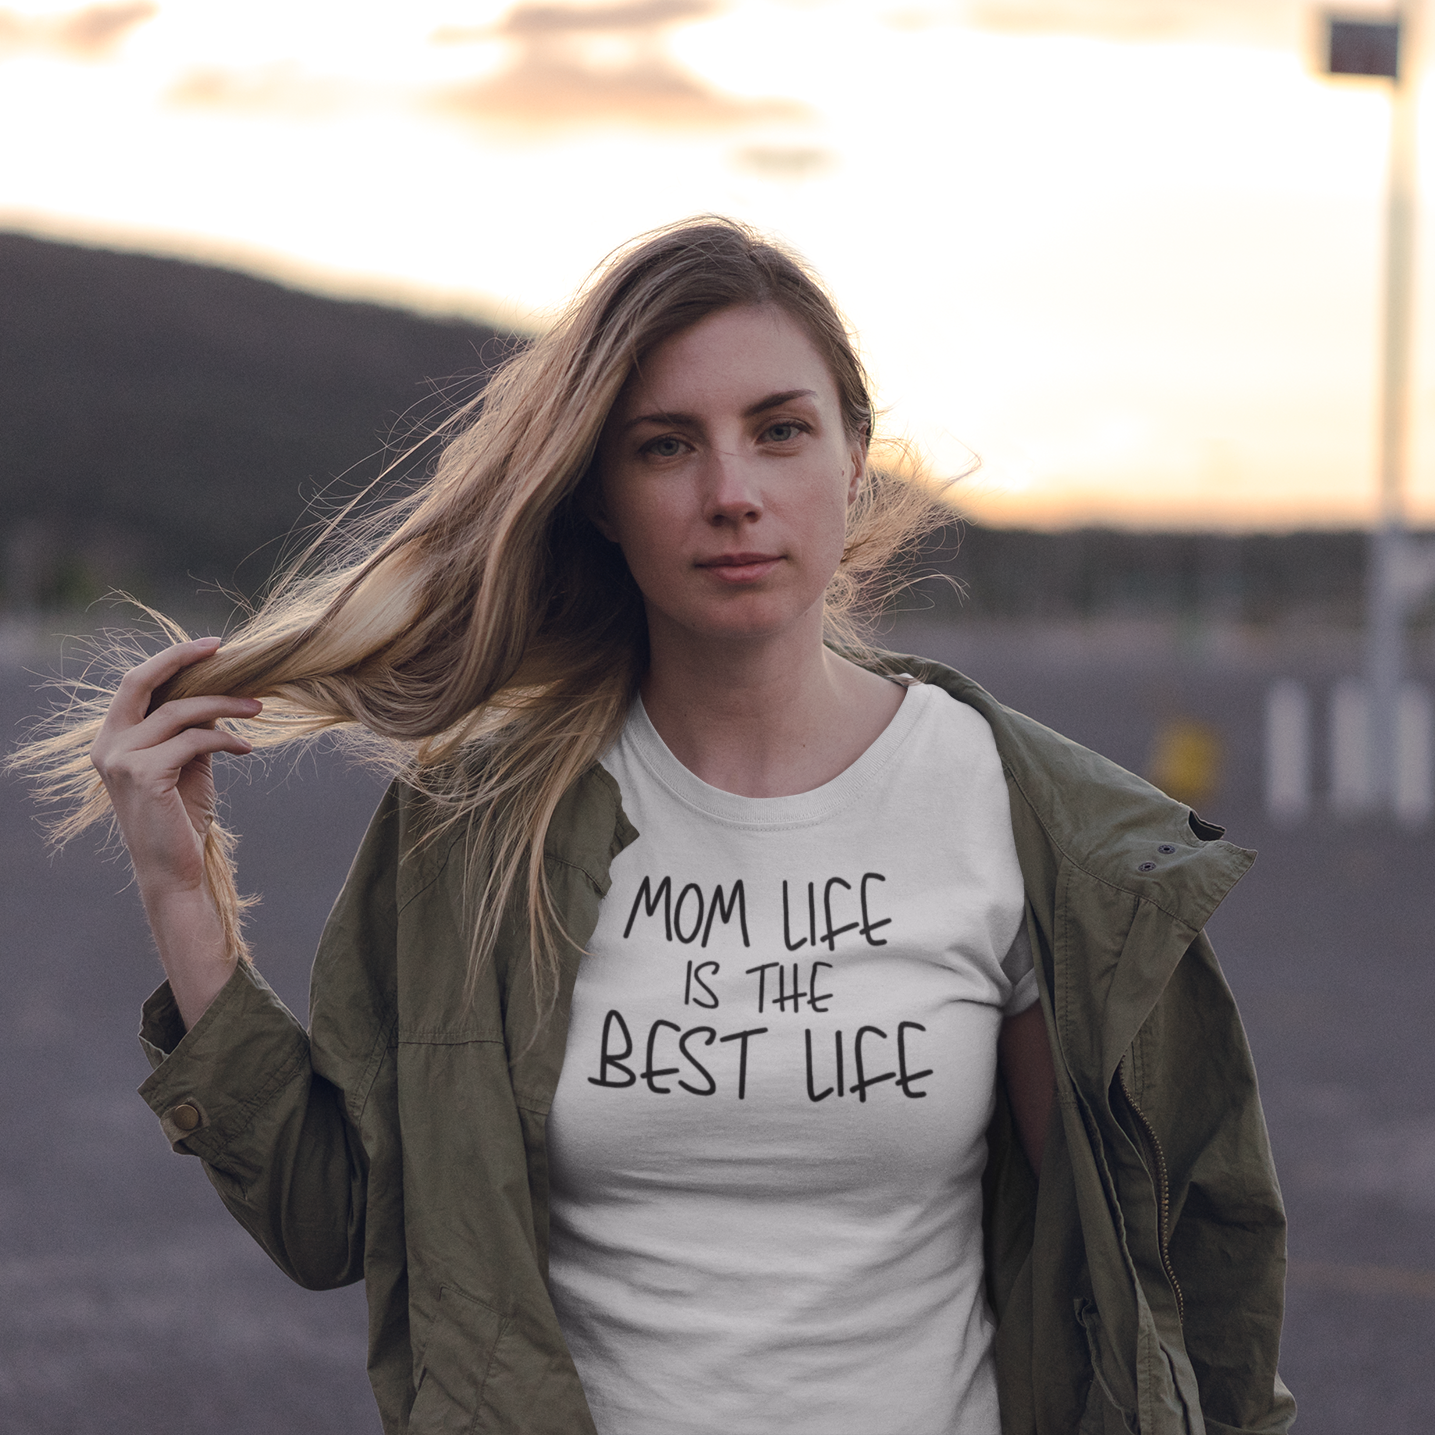 'Mom life is the best life' volwassene shirt